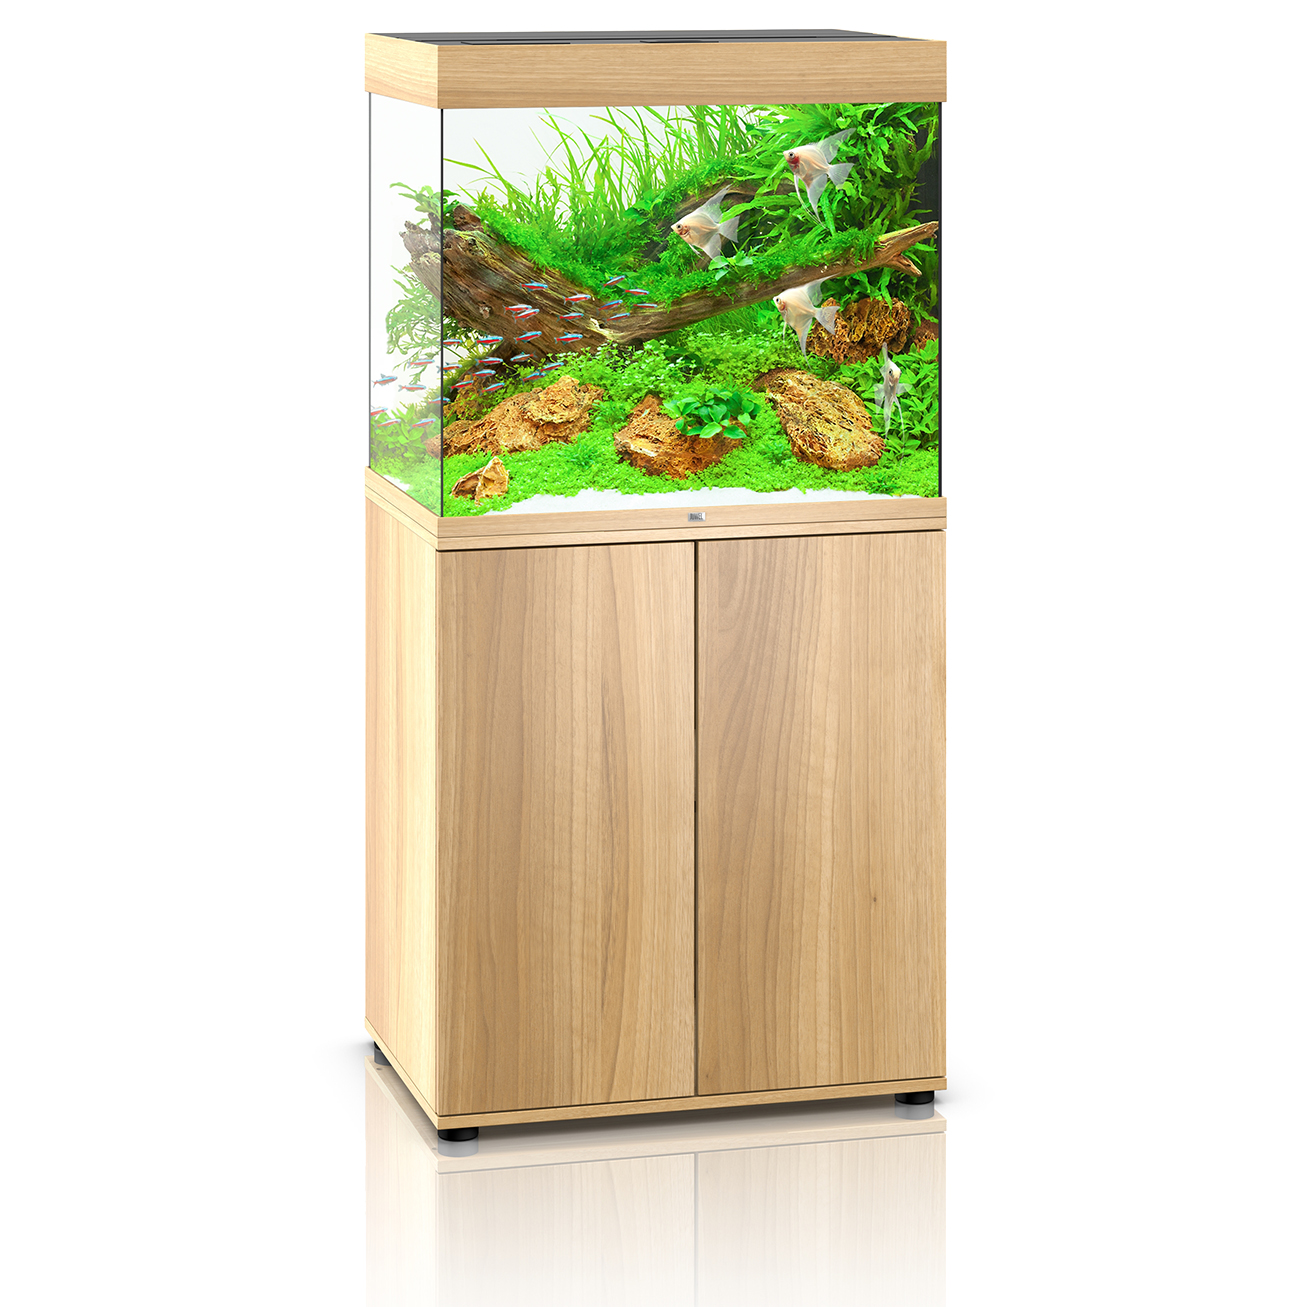 Juwel Lido 200 Aquarium & Cabinet - LED Lighting, Filter, Heater Fish Tank